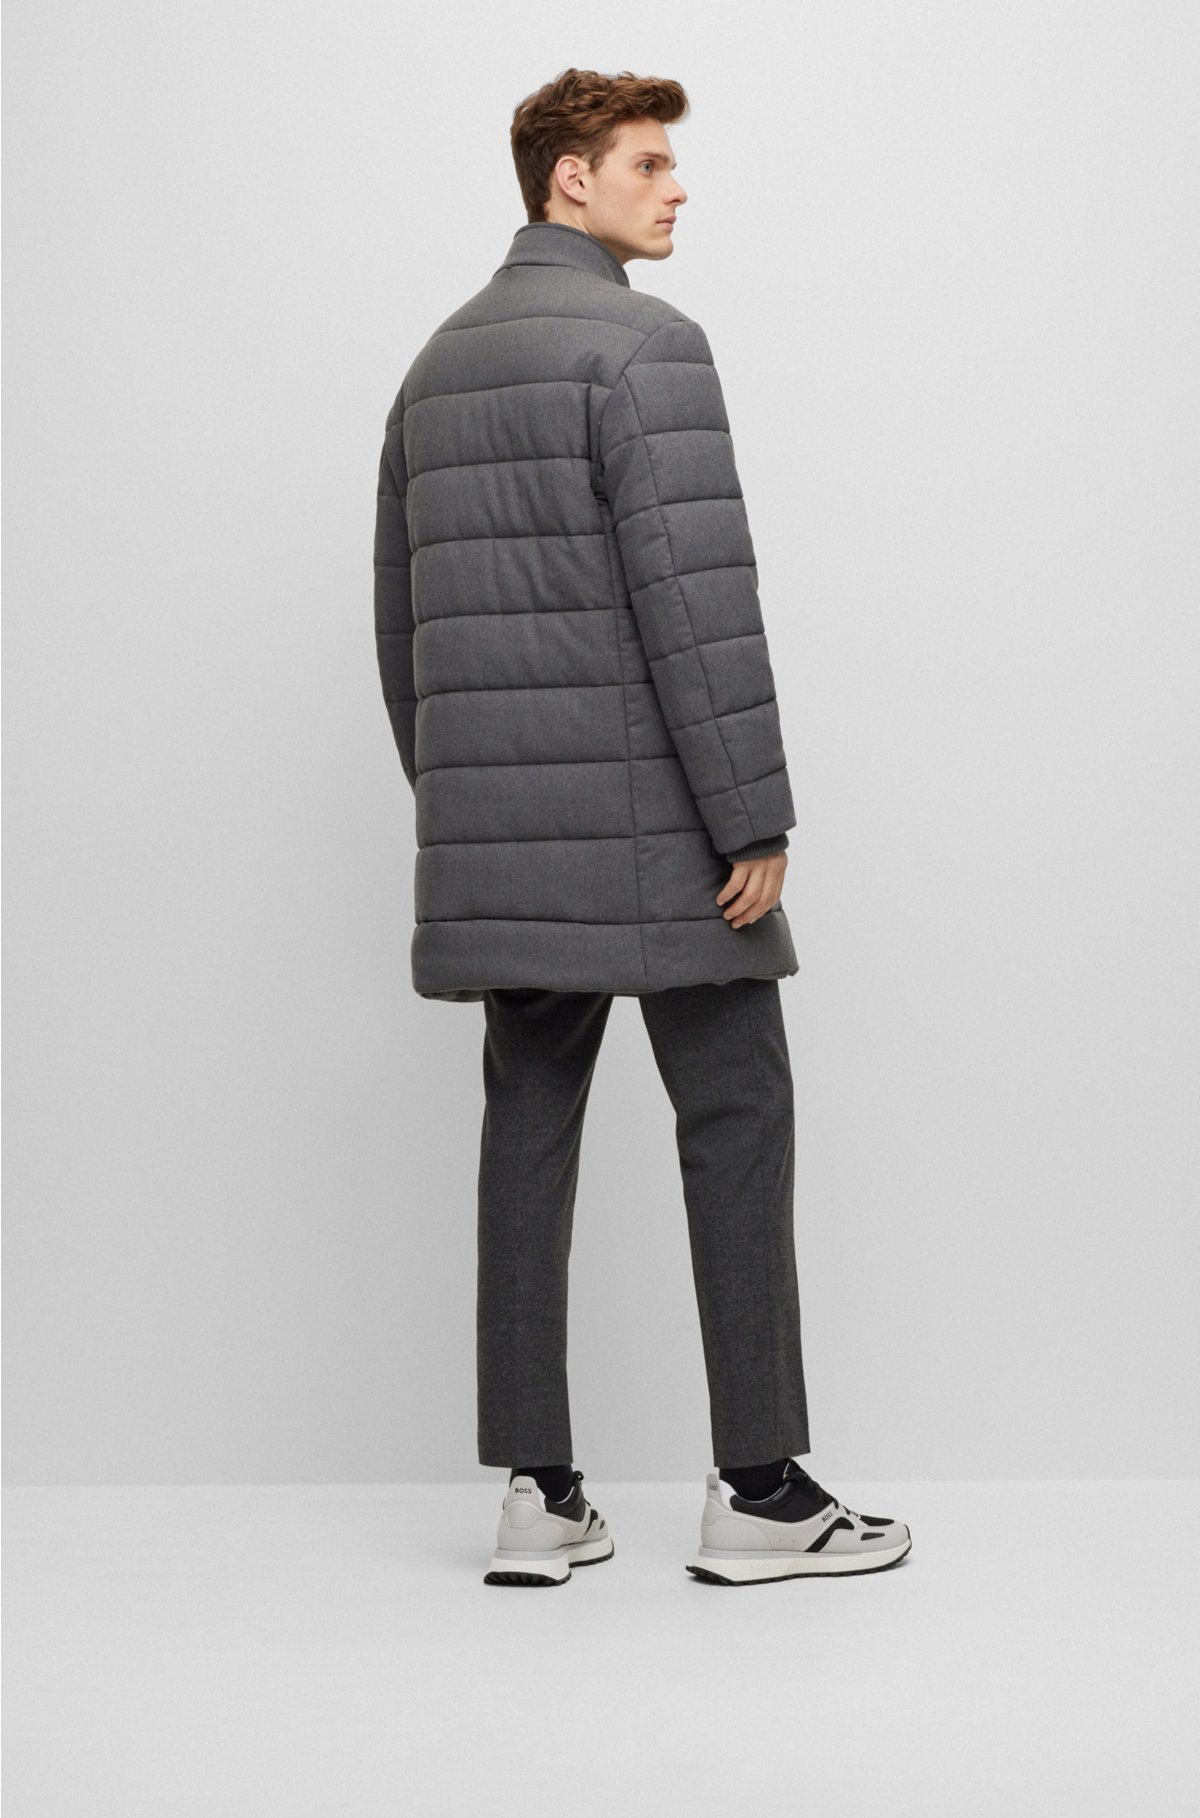 Louis Vuitton 2019 Contrast Monogram Shearling Overcoat - Grey